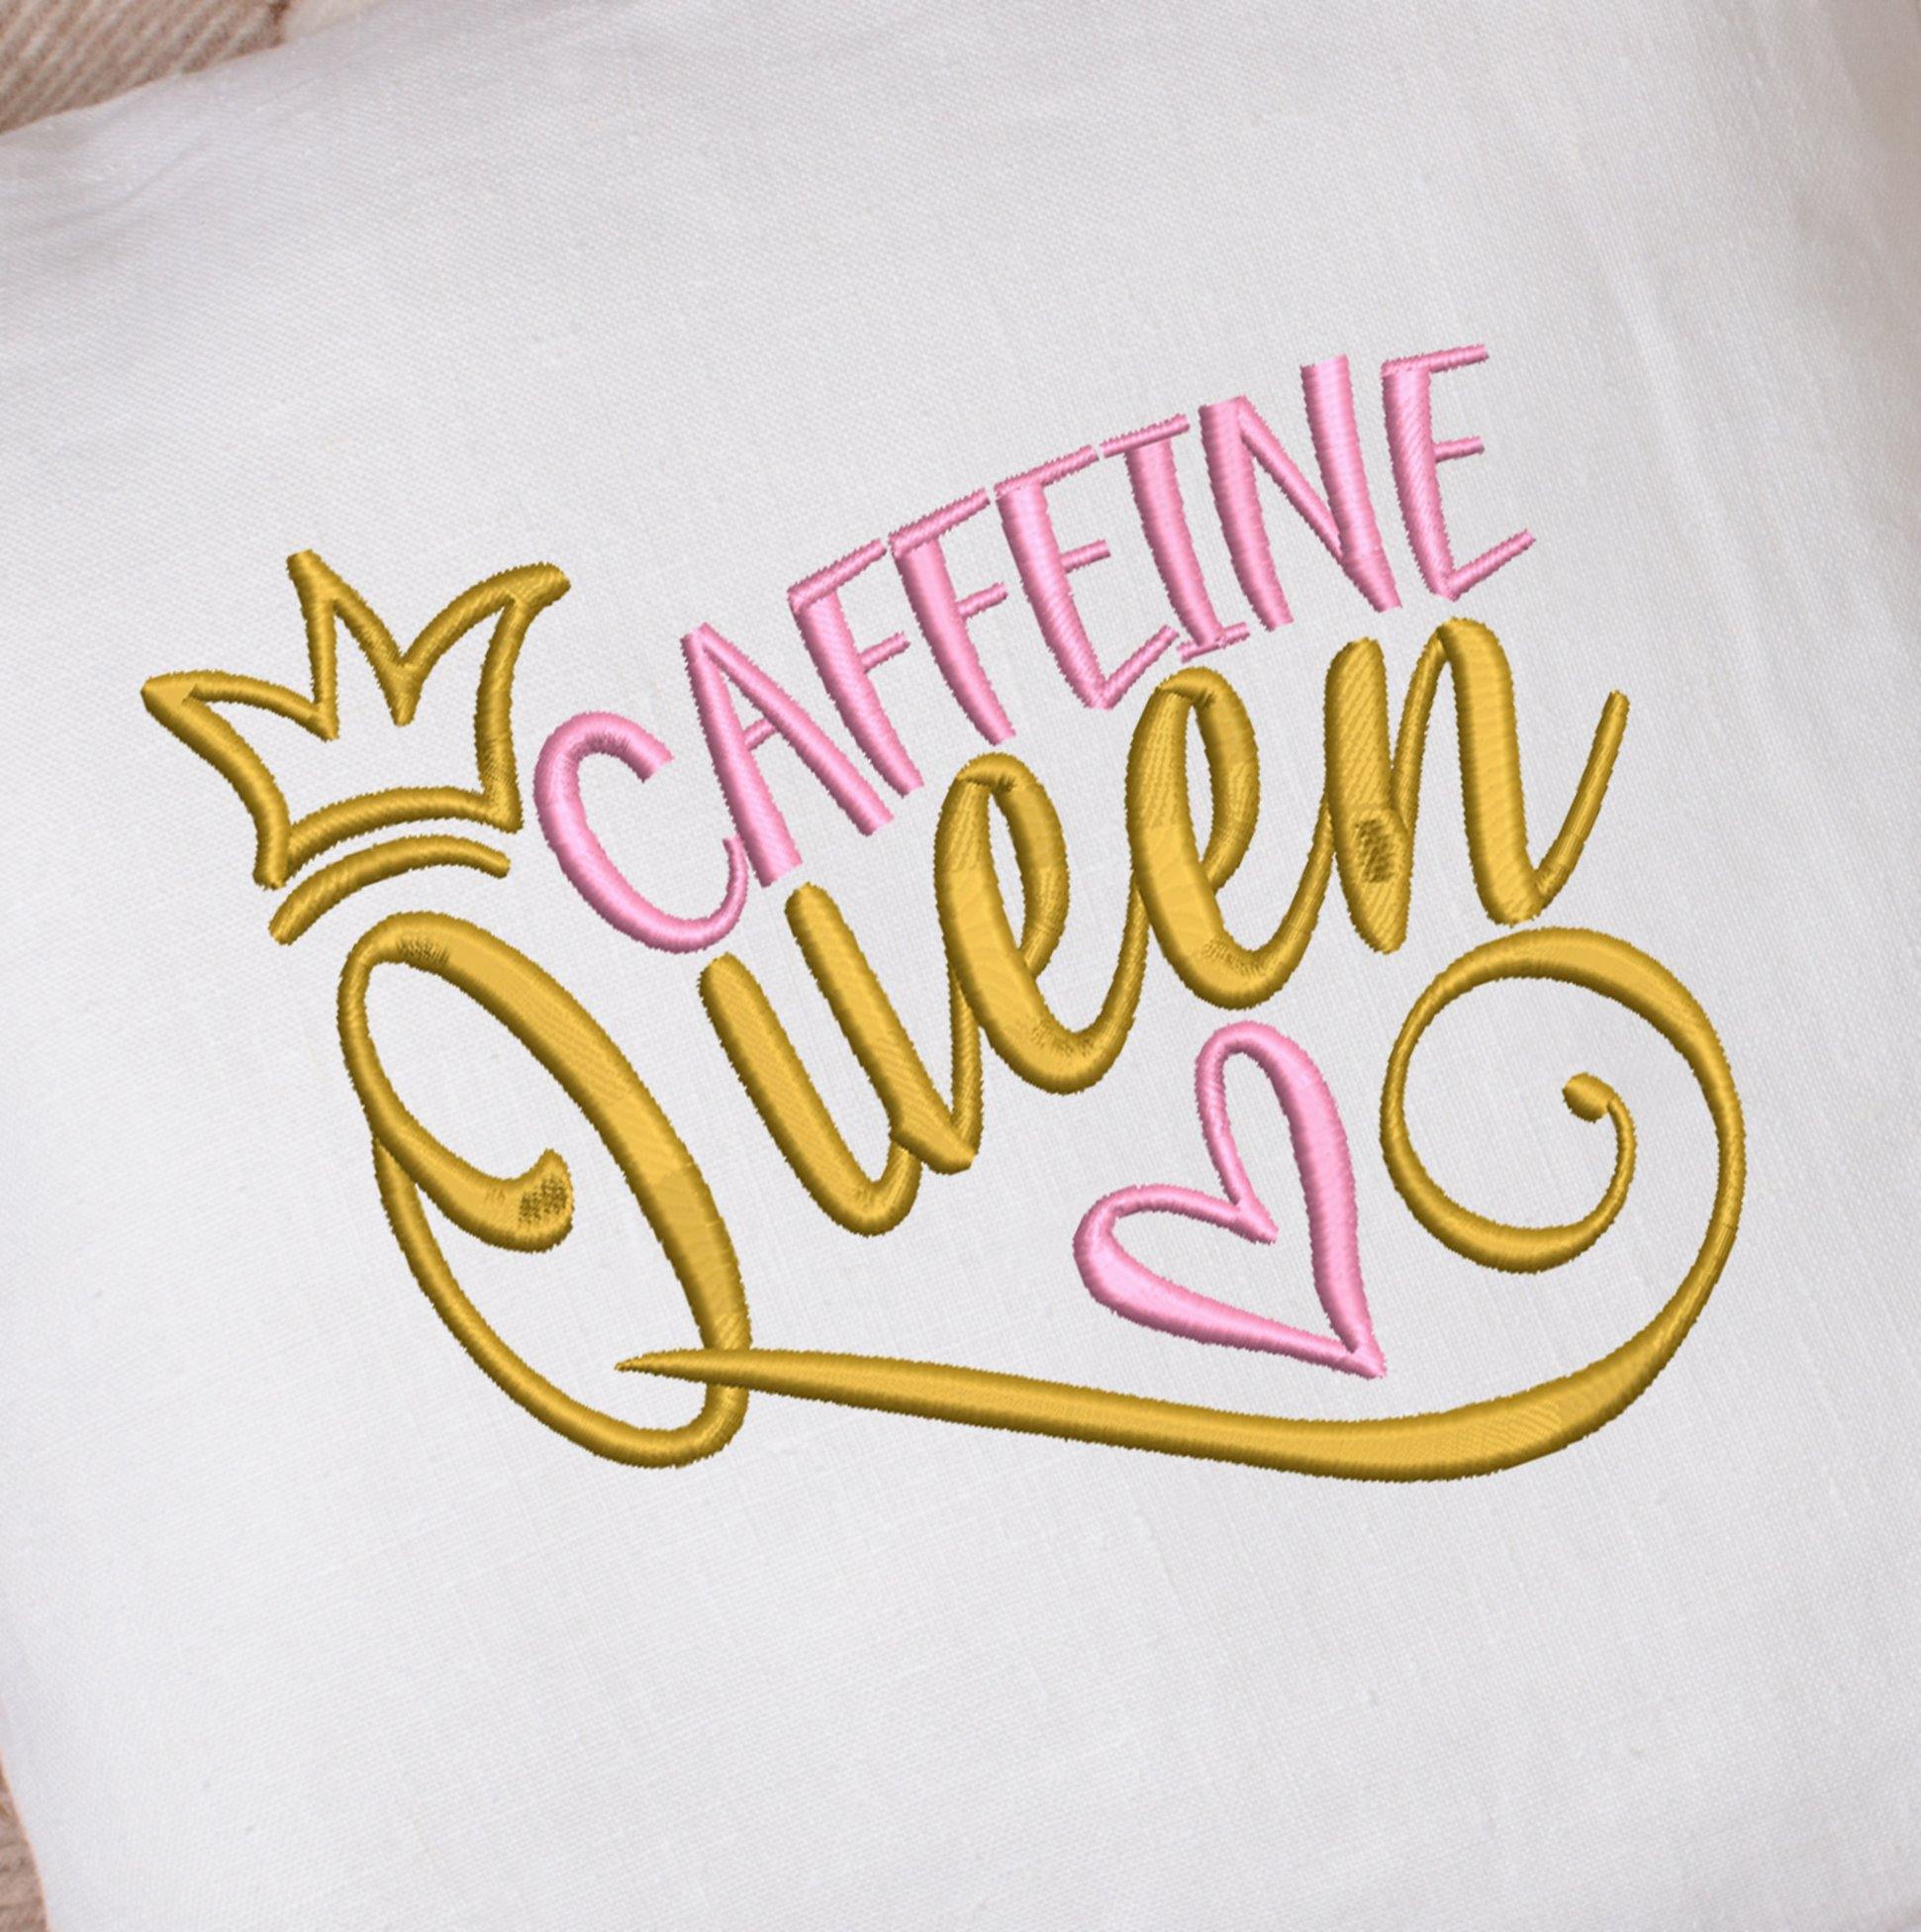 Caffeine Queen 2021 Embroidery Design - Oh My Crafty Supplies Inc.